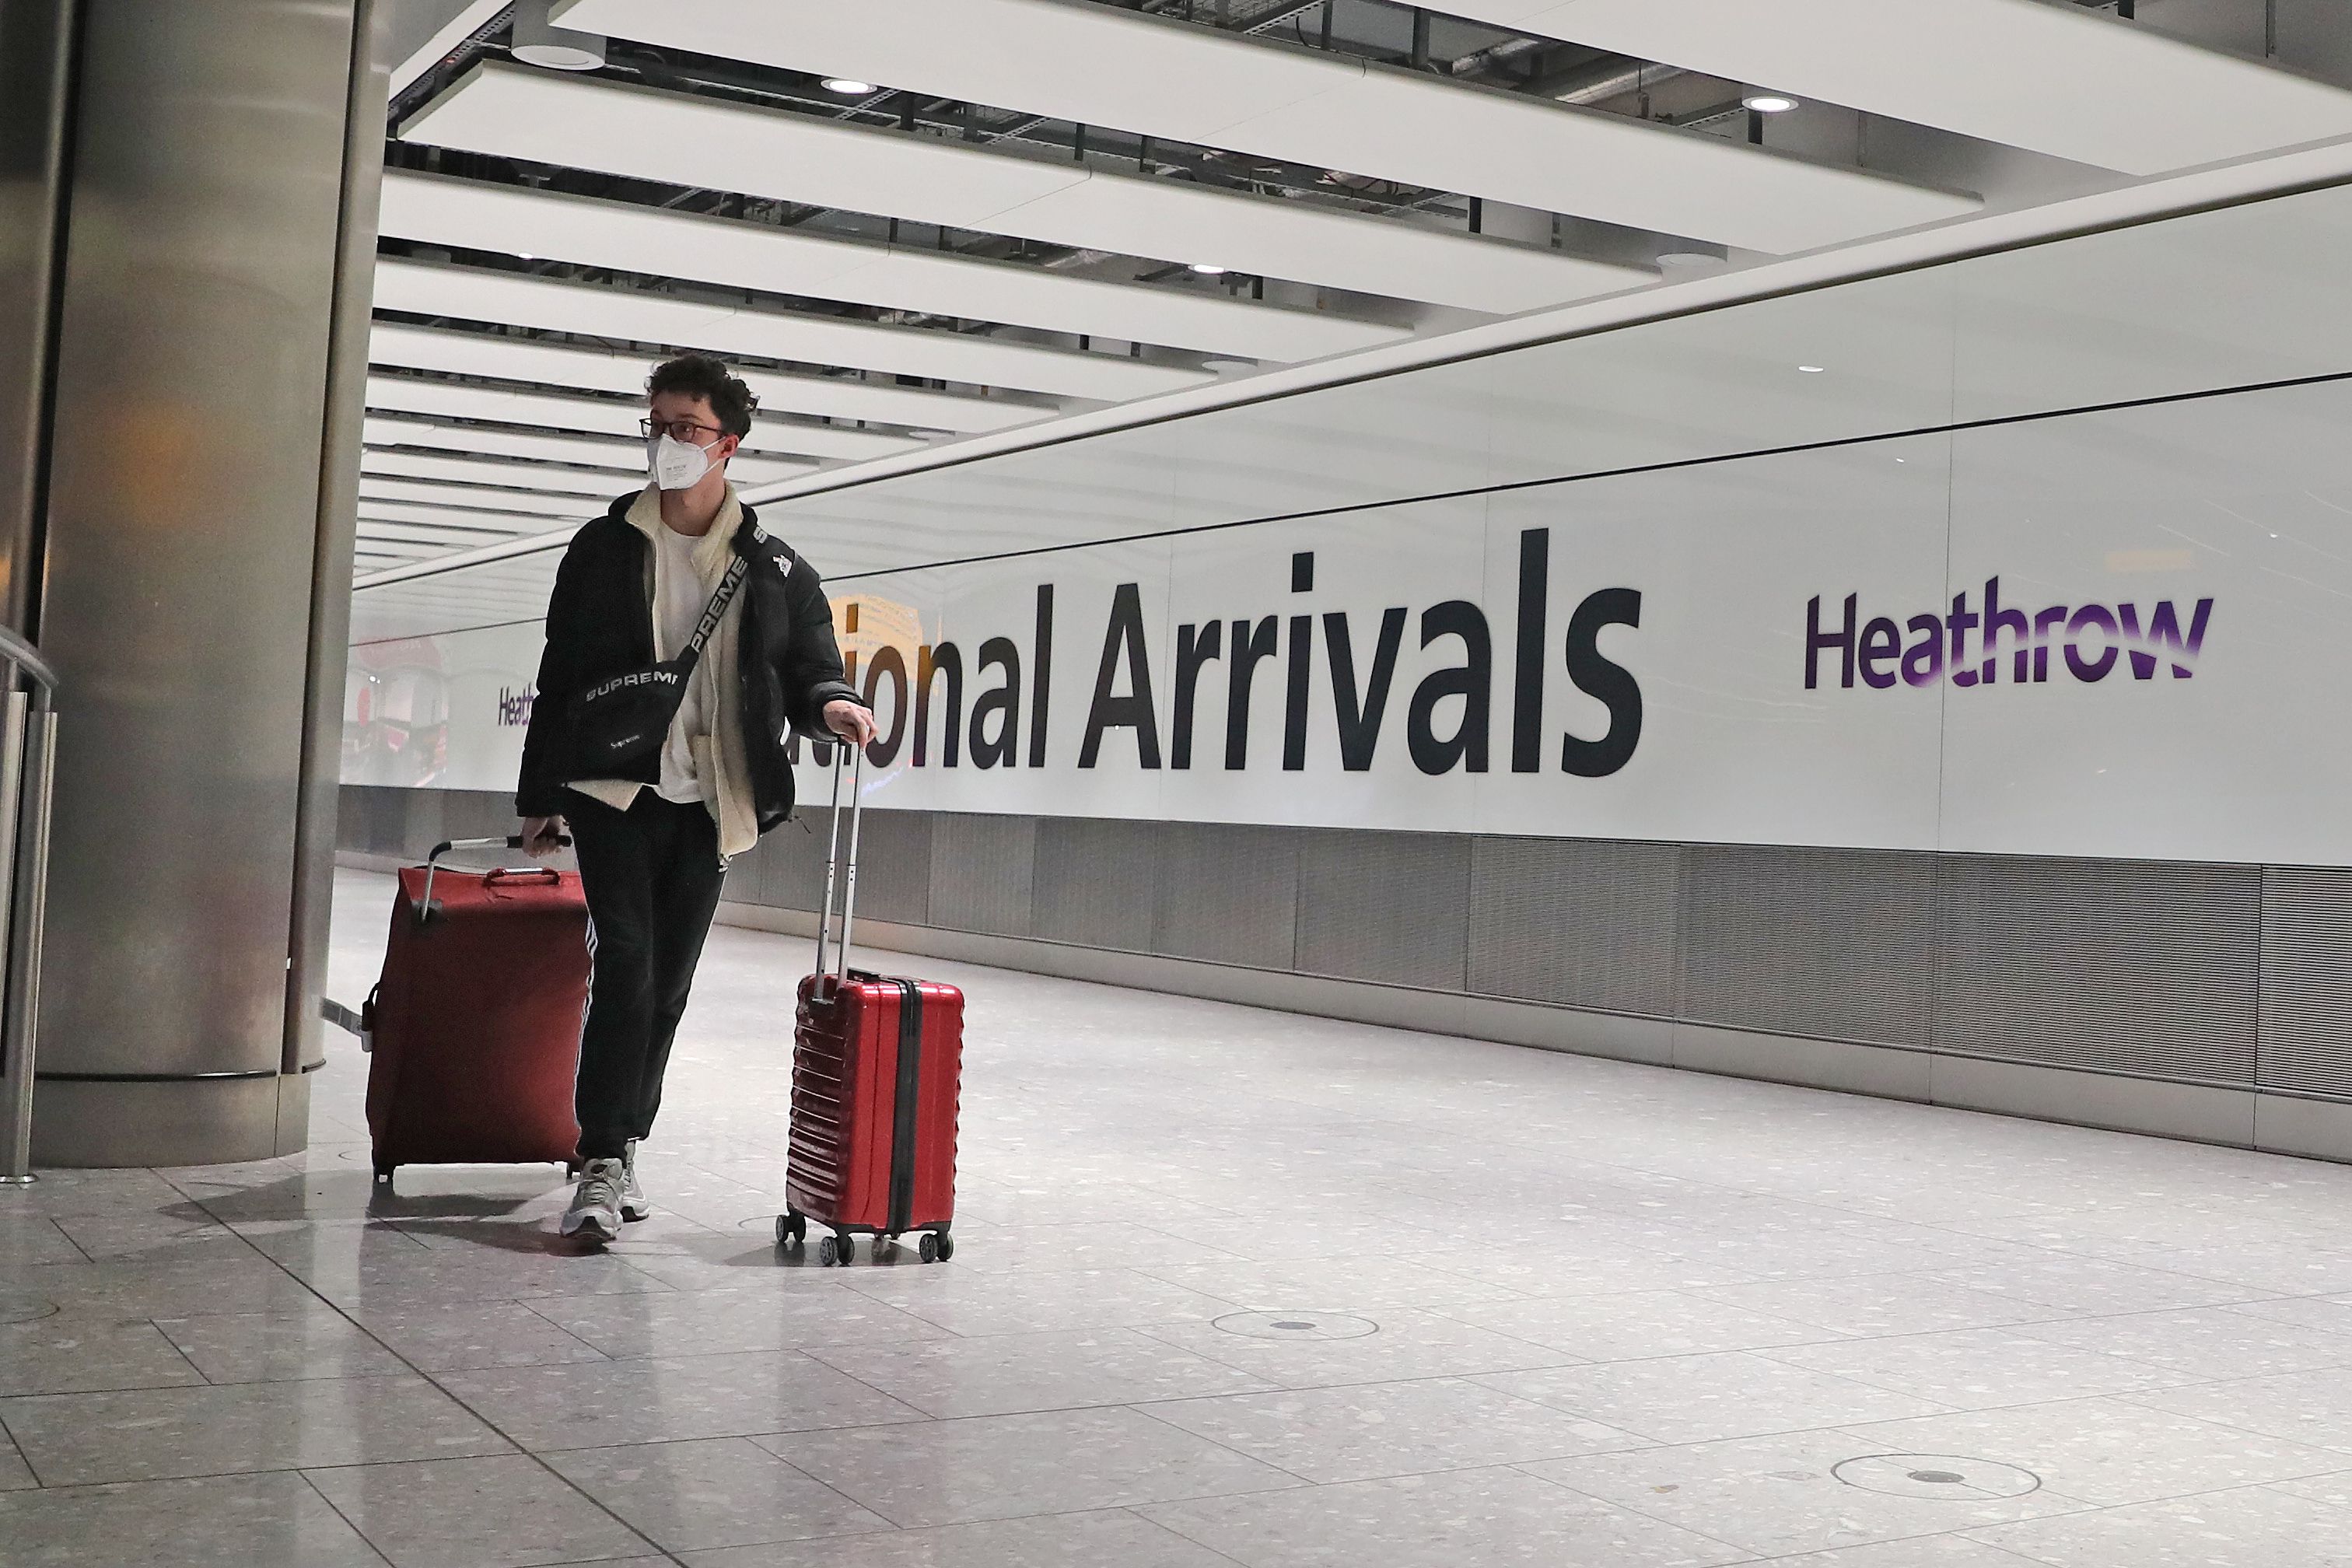 Arrive in town. Arriving in London фото. Аэропорт Хитроу коронавирус. Знаки в аэропорта Heathrow. Arrive in.